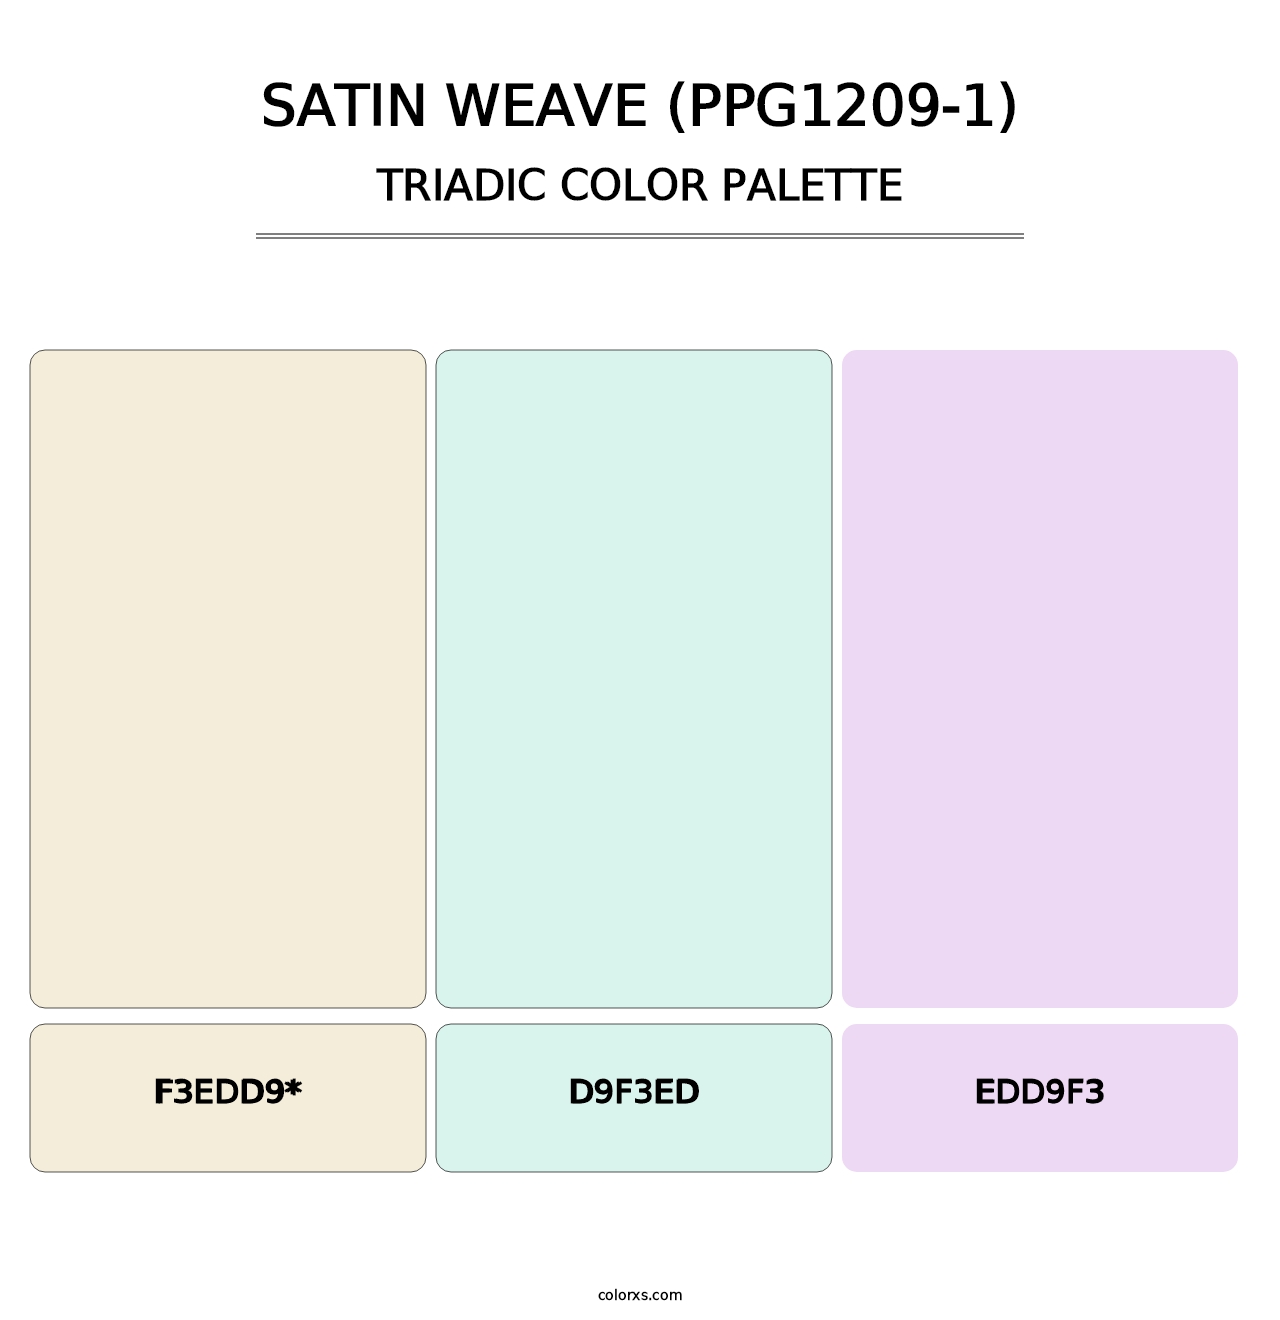 Satin Weave (PPG1209-1) - Triadic Color Palette